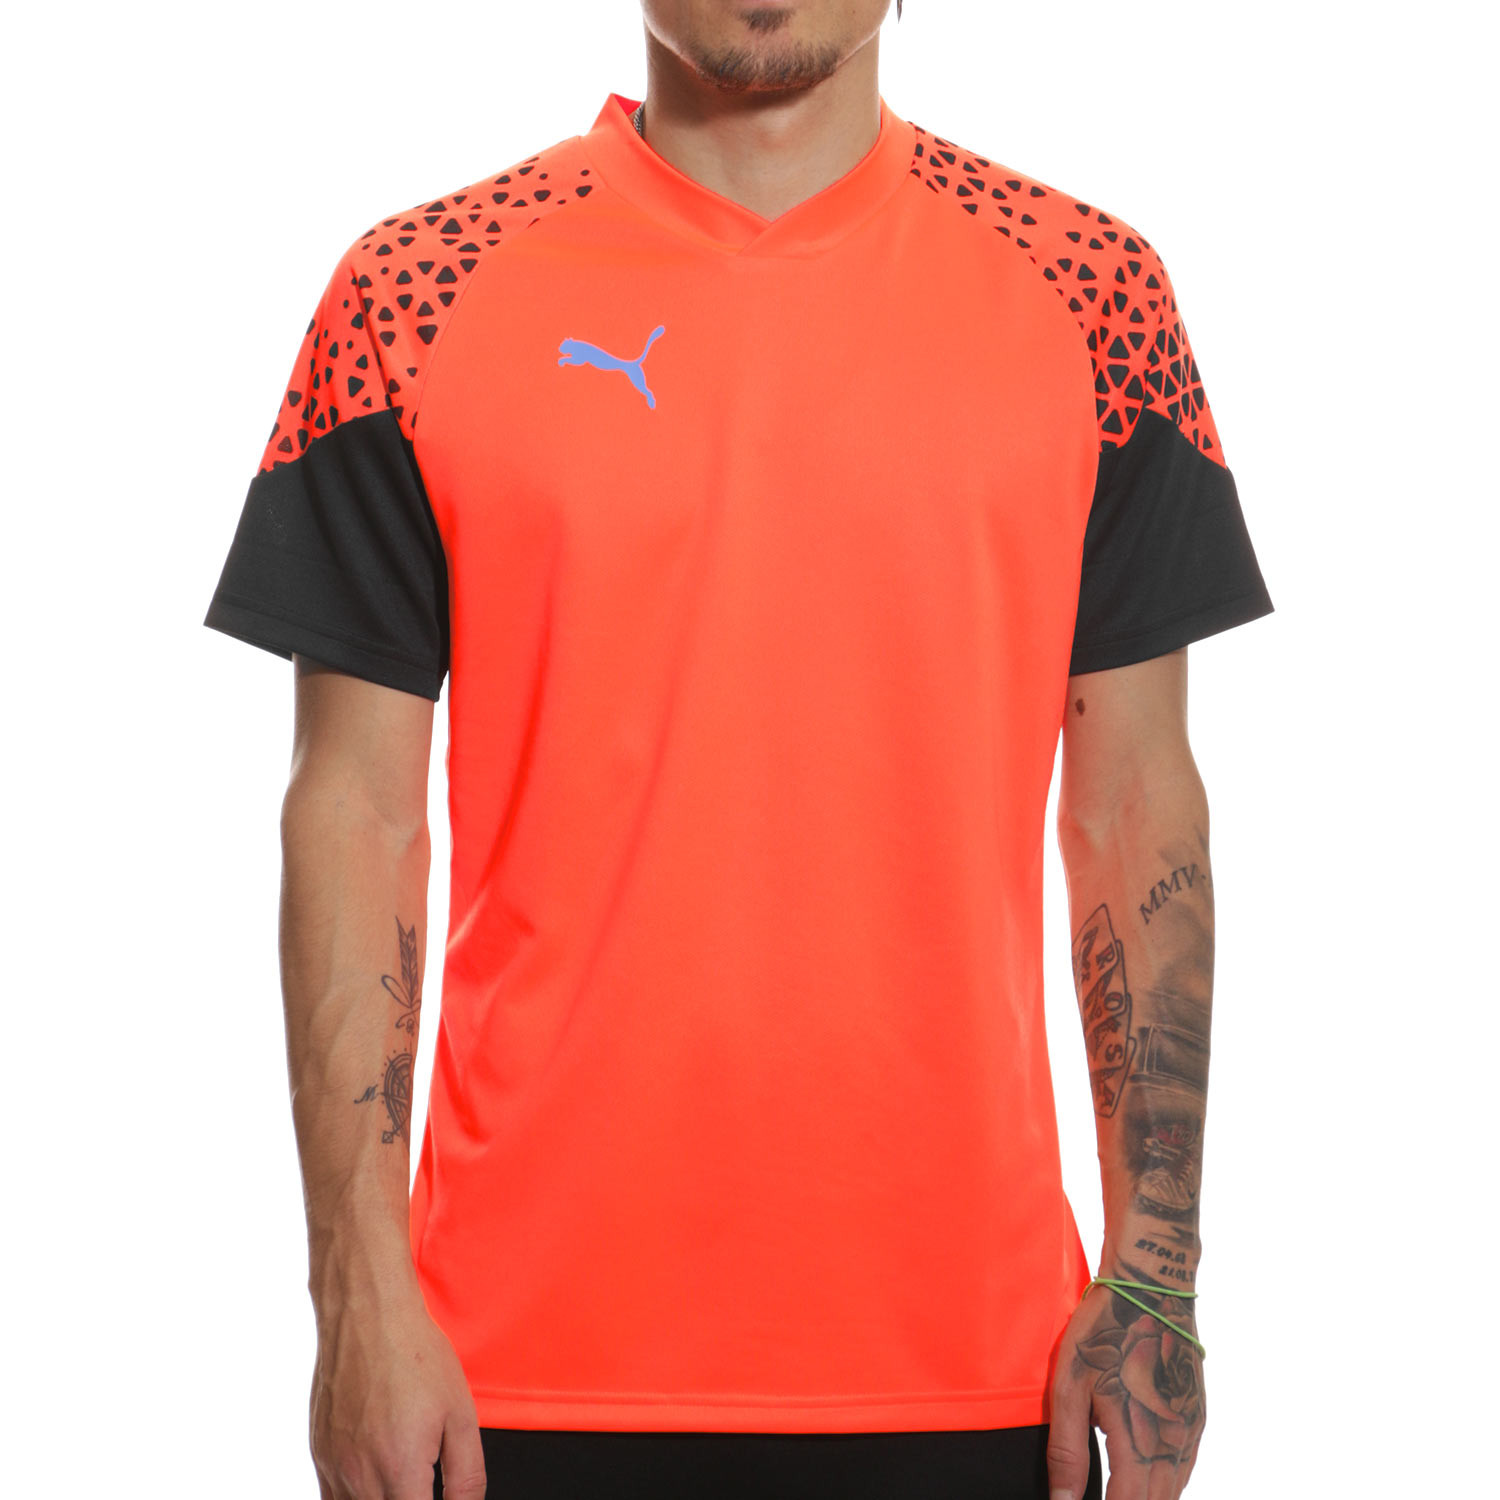 Camiseta Puma individualCUP training naranja